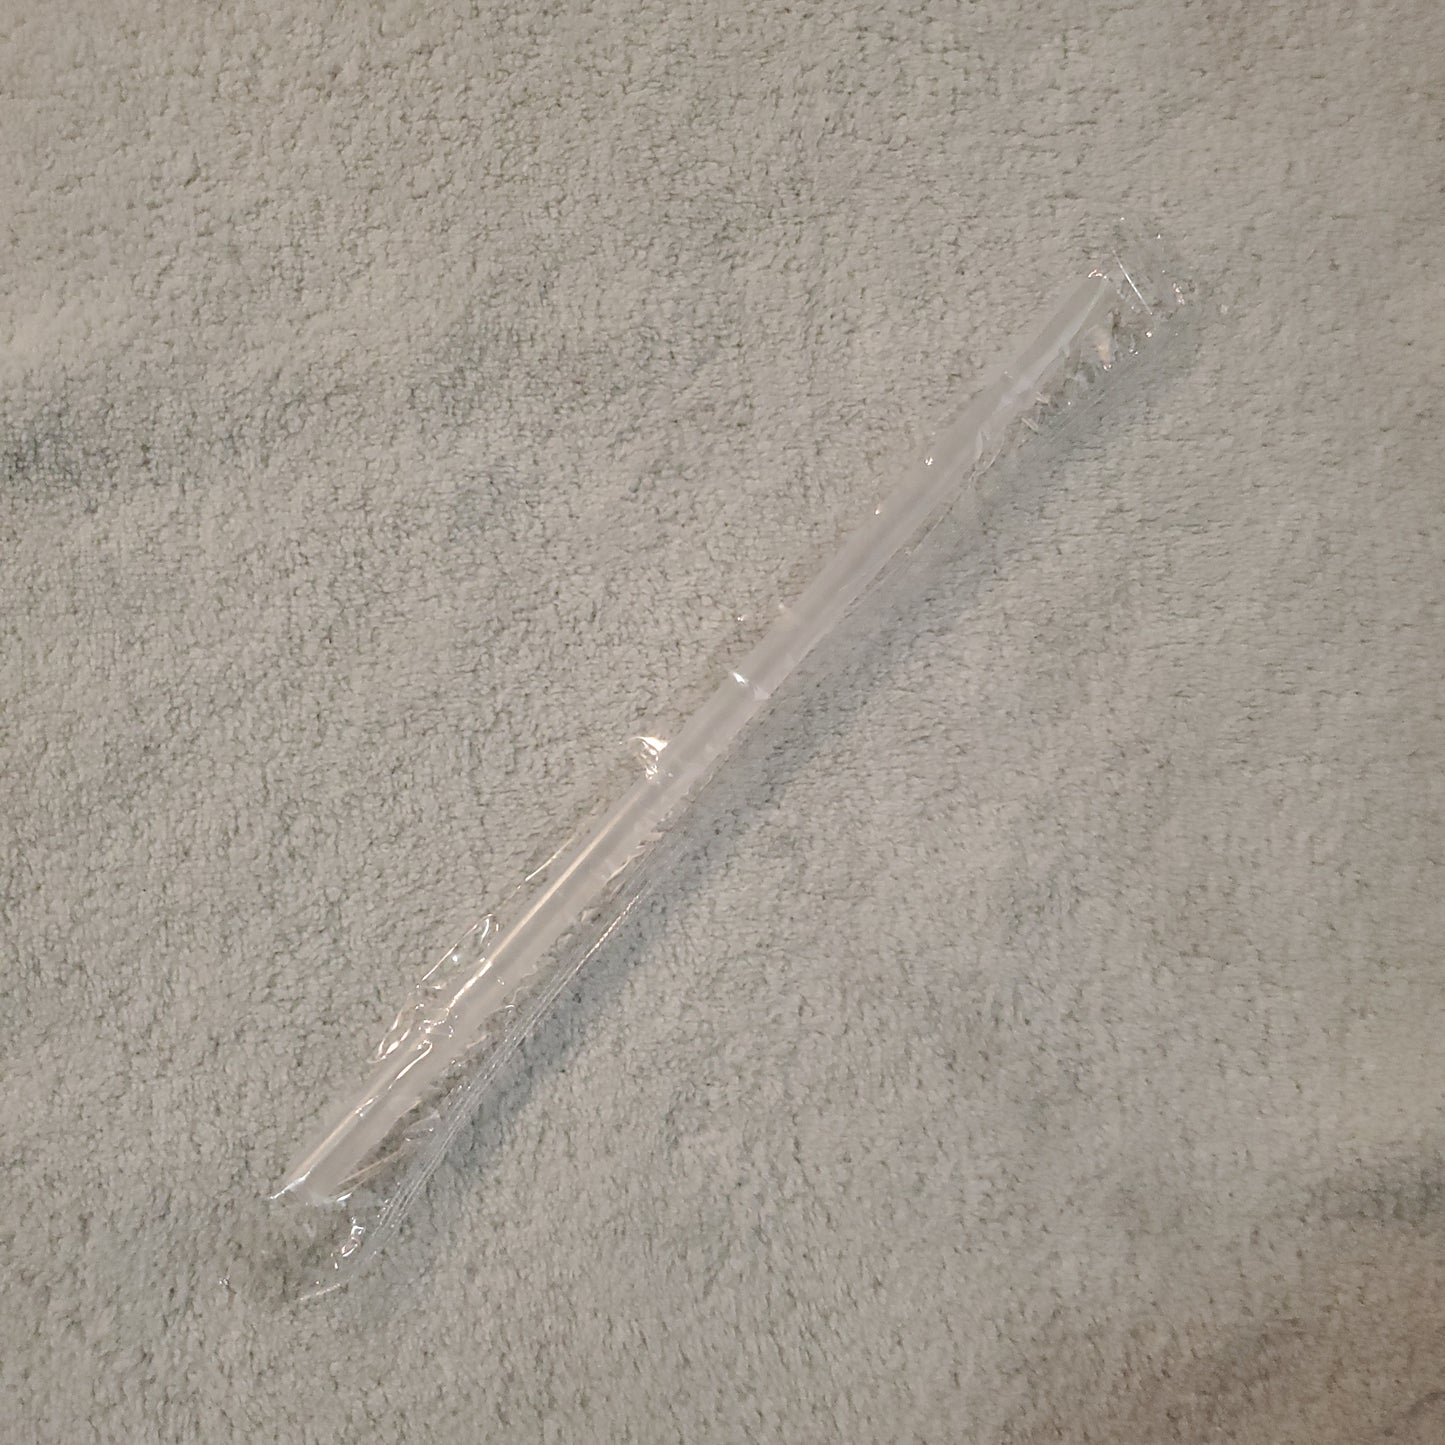 15oz Plastic Straws